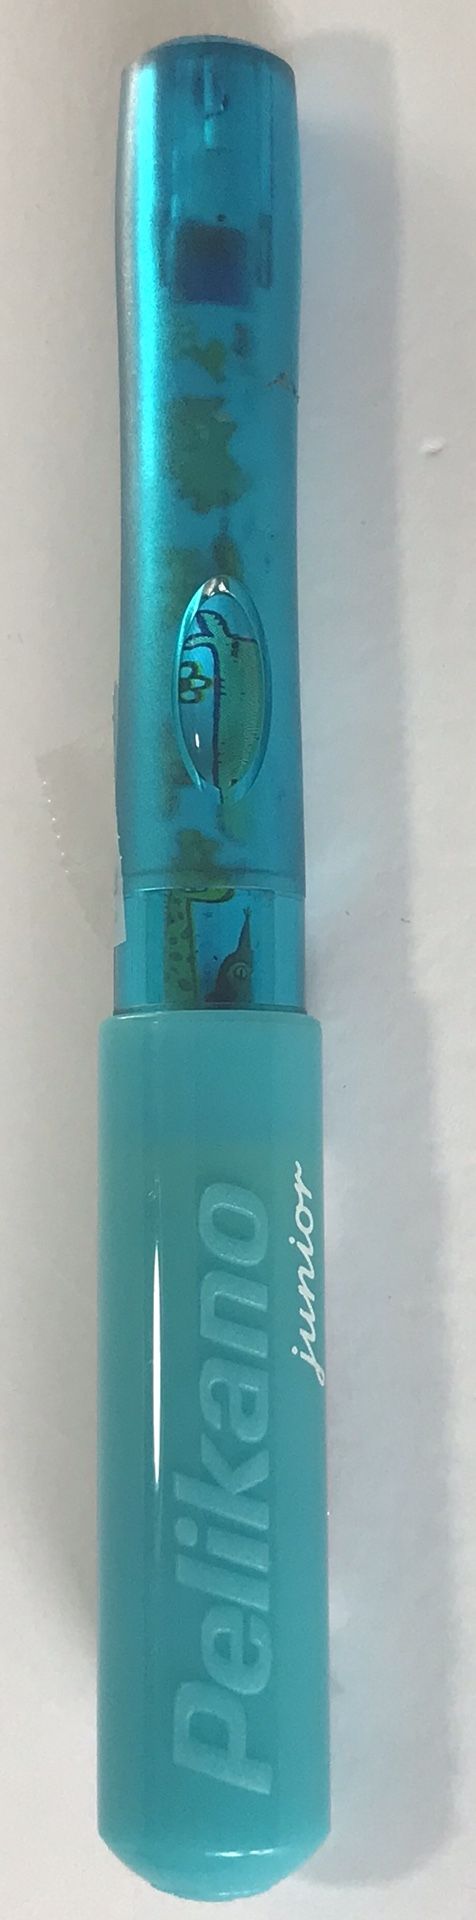 Pelikan Fountain Pen, Right-Handed, Medium Nib, Turquoise